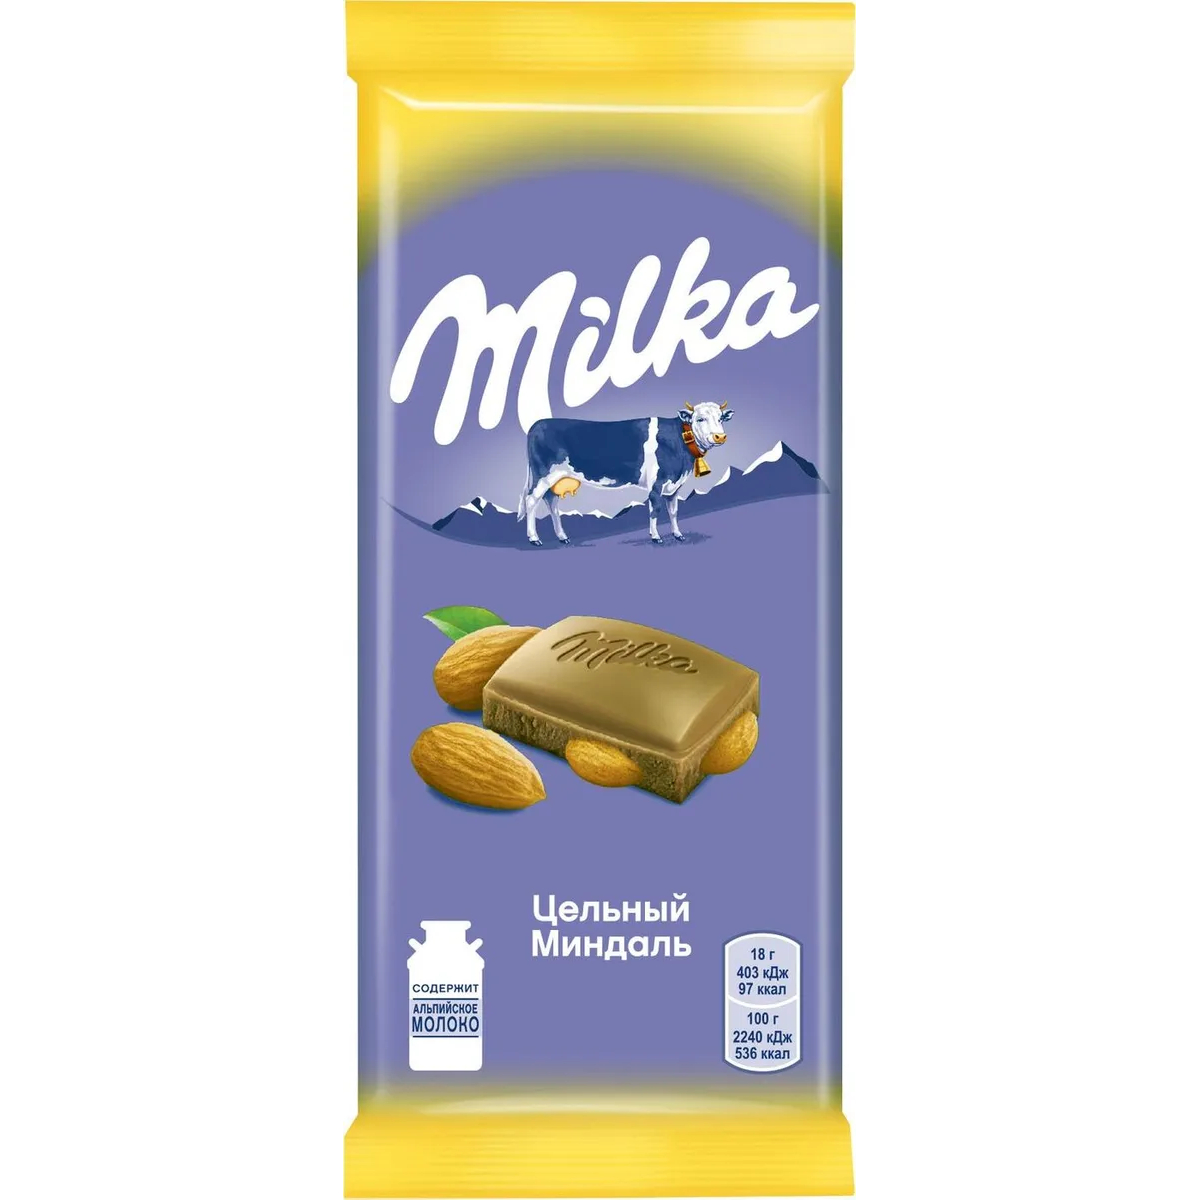 Шоколад молочный Milka с цельным миндалём, 85 г шоколад milka молочный с цельным миндалем 90 г